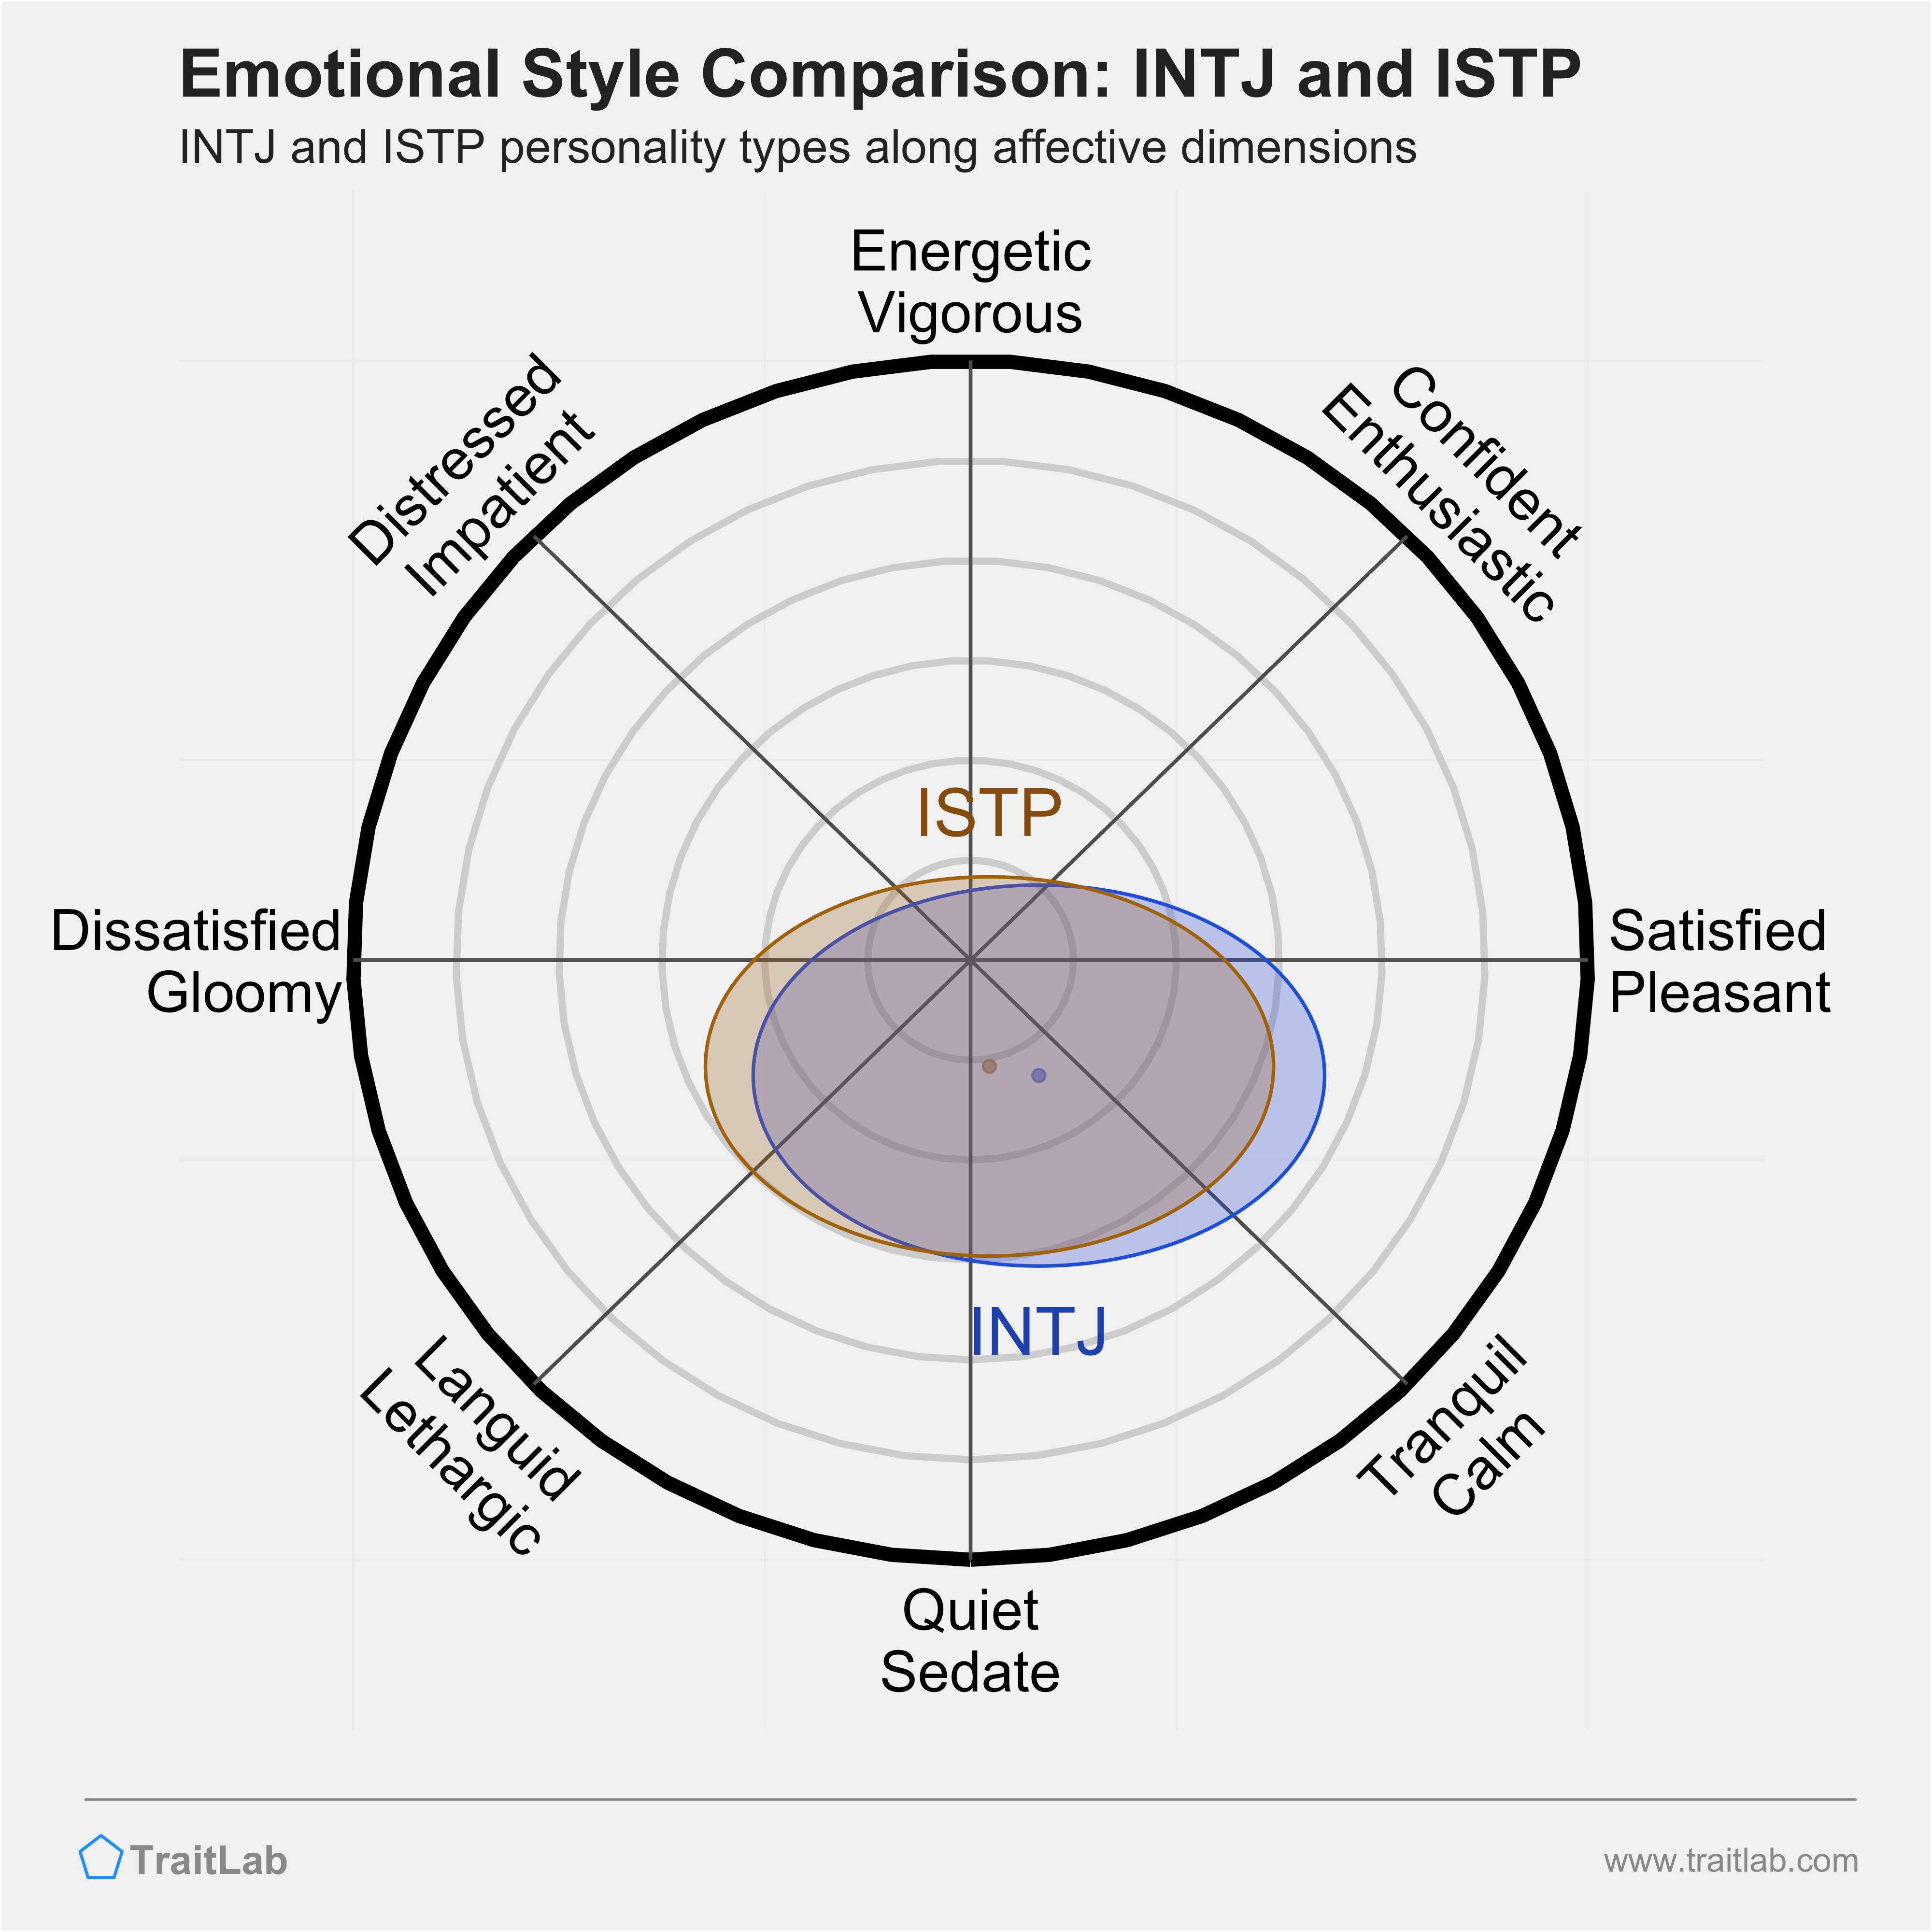 INTJ and ISTP comparison across emotional (affective) dimensions